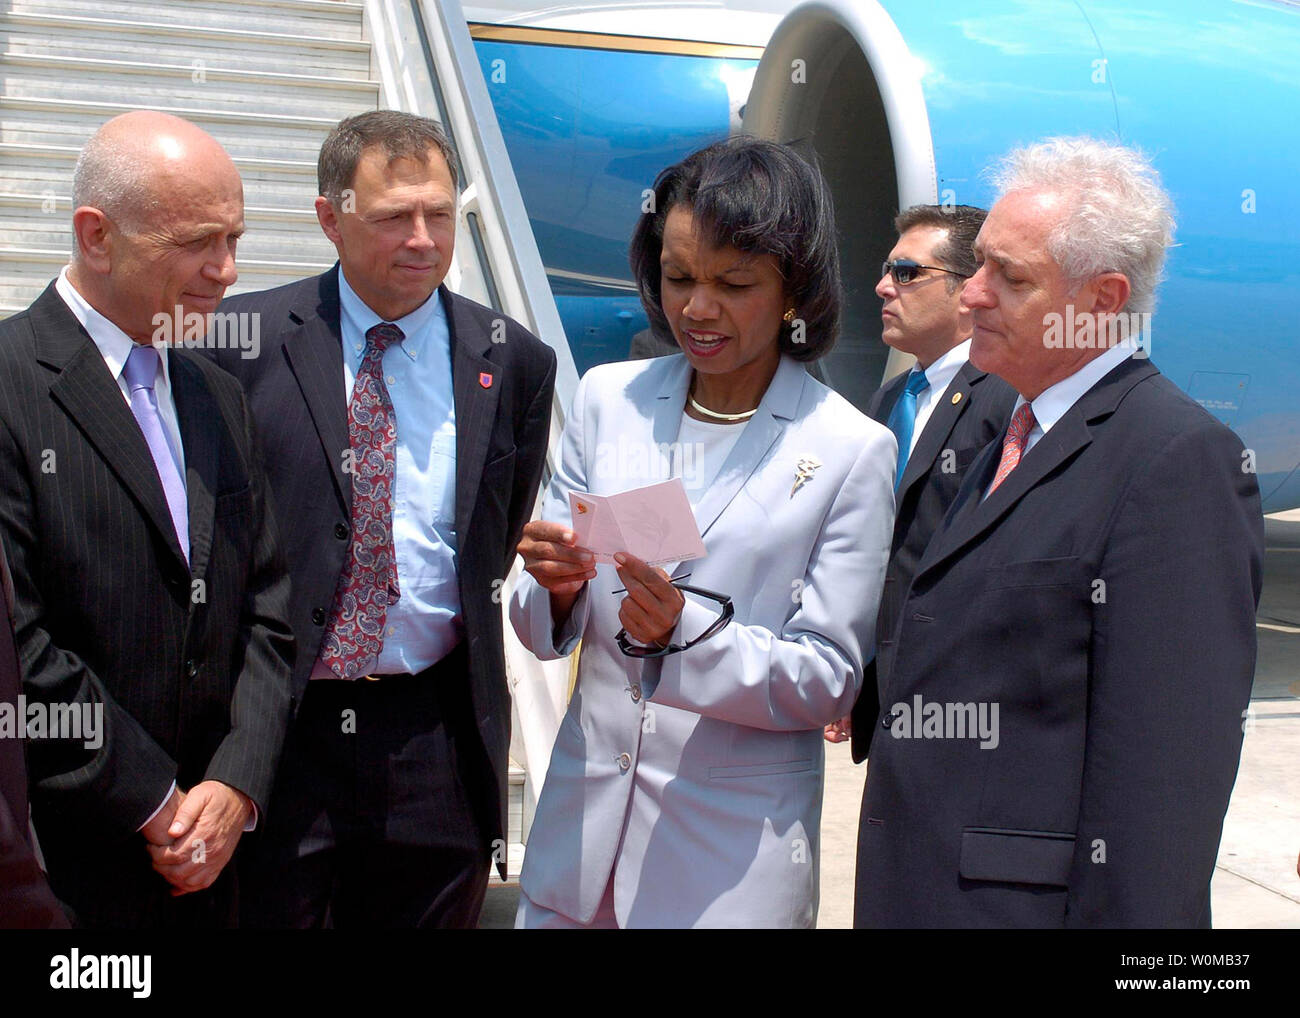 U.S. Secretary of State Condoleezza Rice (C) arrives from Jeddah at Ben Gurion Airport in Israel on August 1, 2007. Welcoming Secretary Rice are U.S. Ambassador to Israel Richard Jones (2nd L) and Chief of Protocol Yitzhak Eldan (R). (UPI Photo/Matty Stern/U.S. Embassy Tel Aviv) Stock Photo